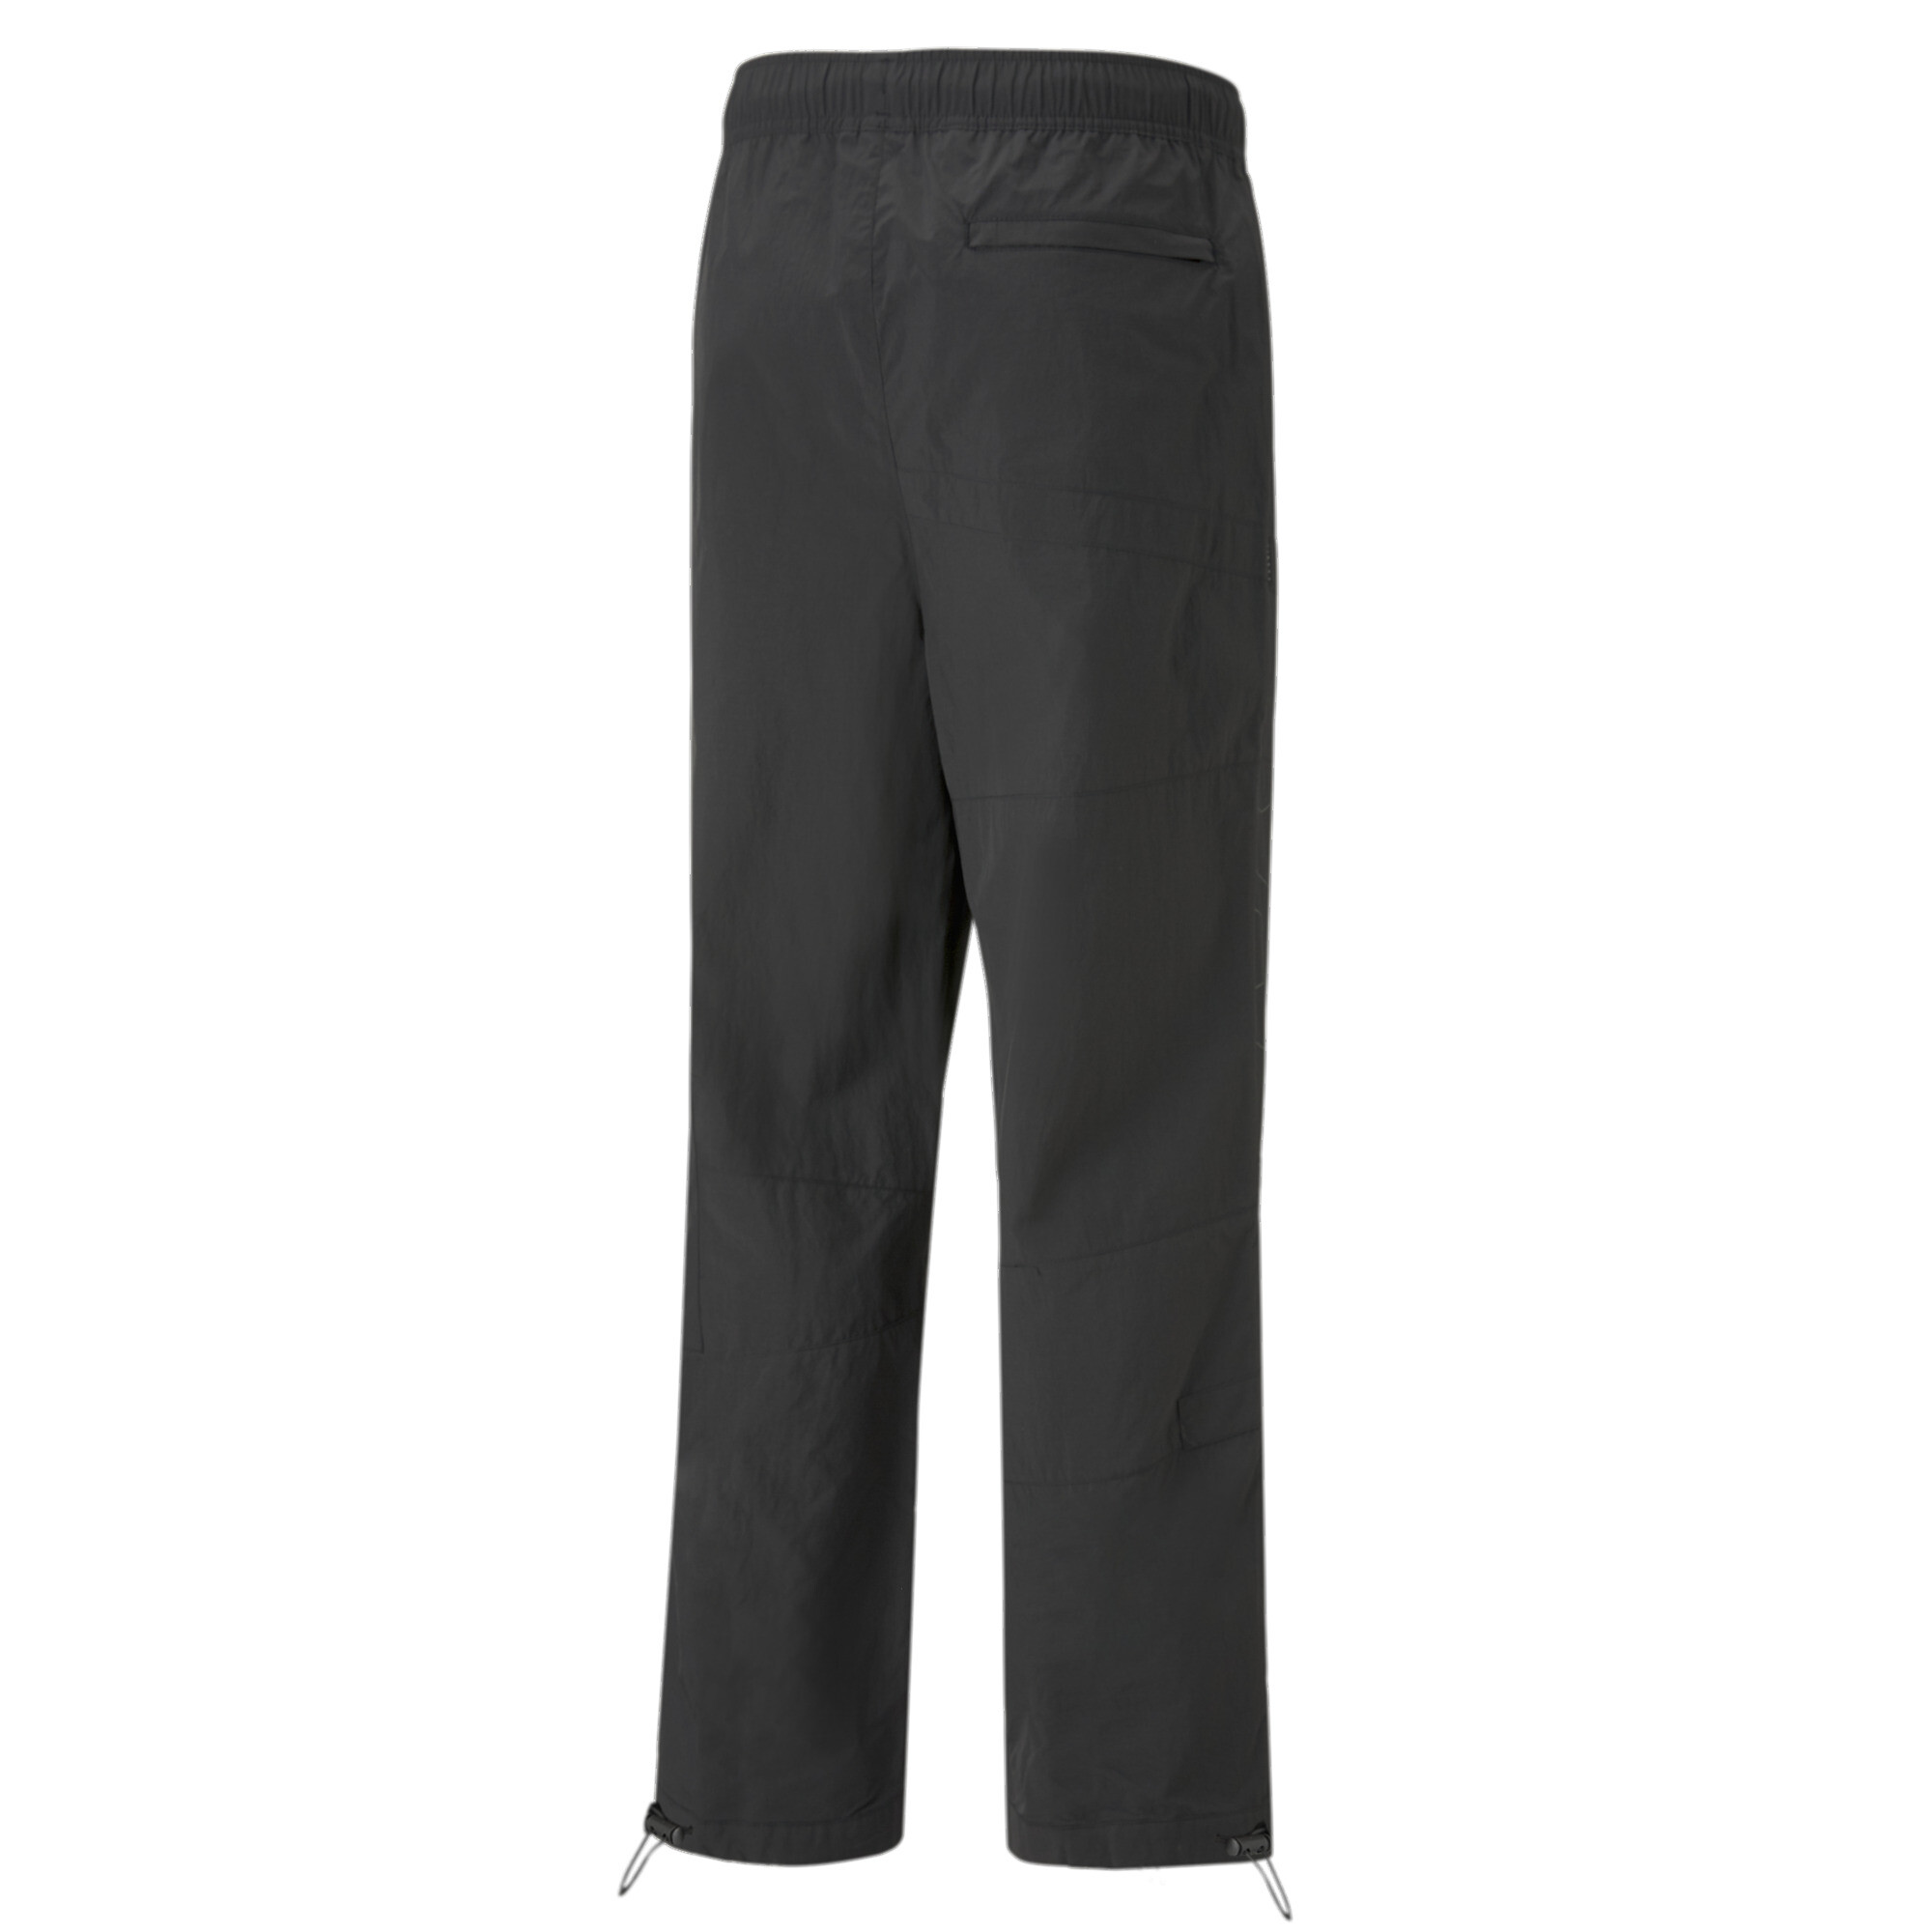 Men's PUMA X PERKS AND MINI Woven Pants In Black, Size Medium